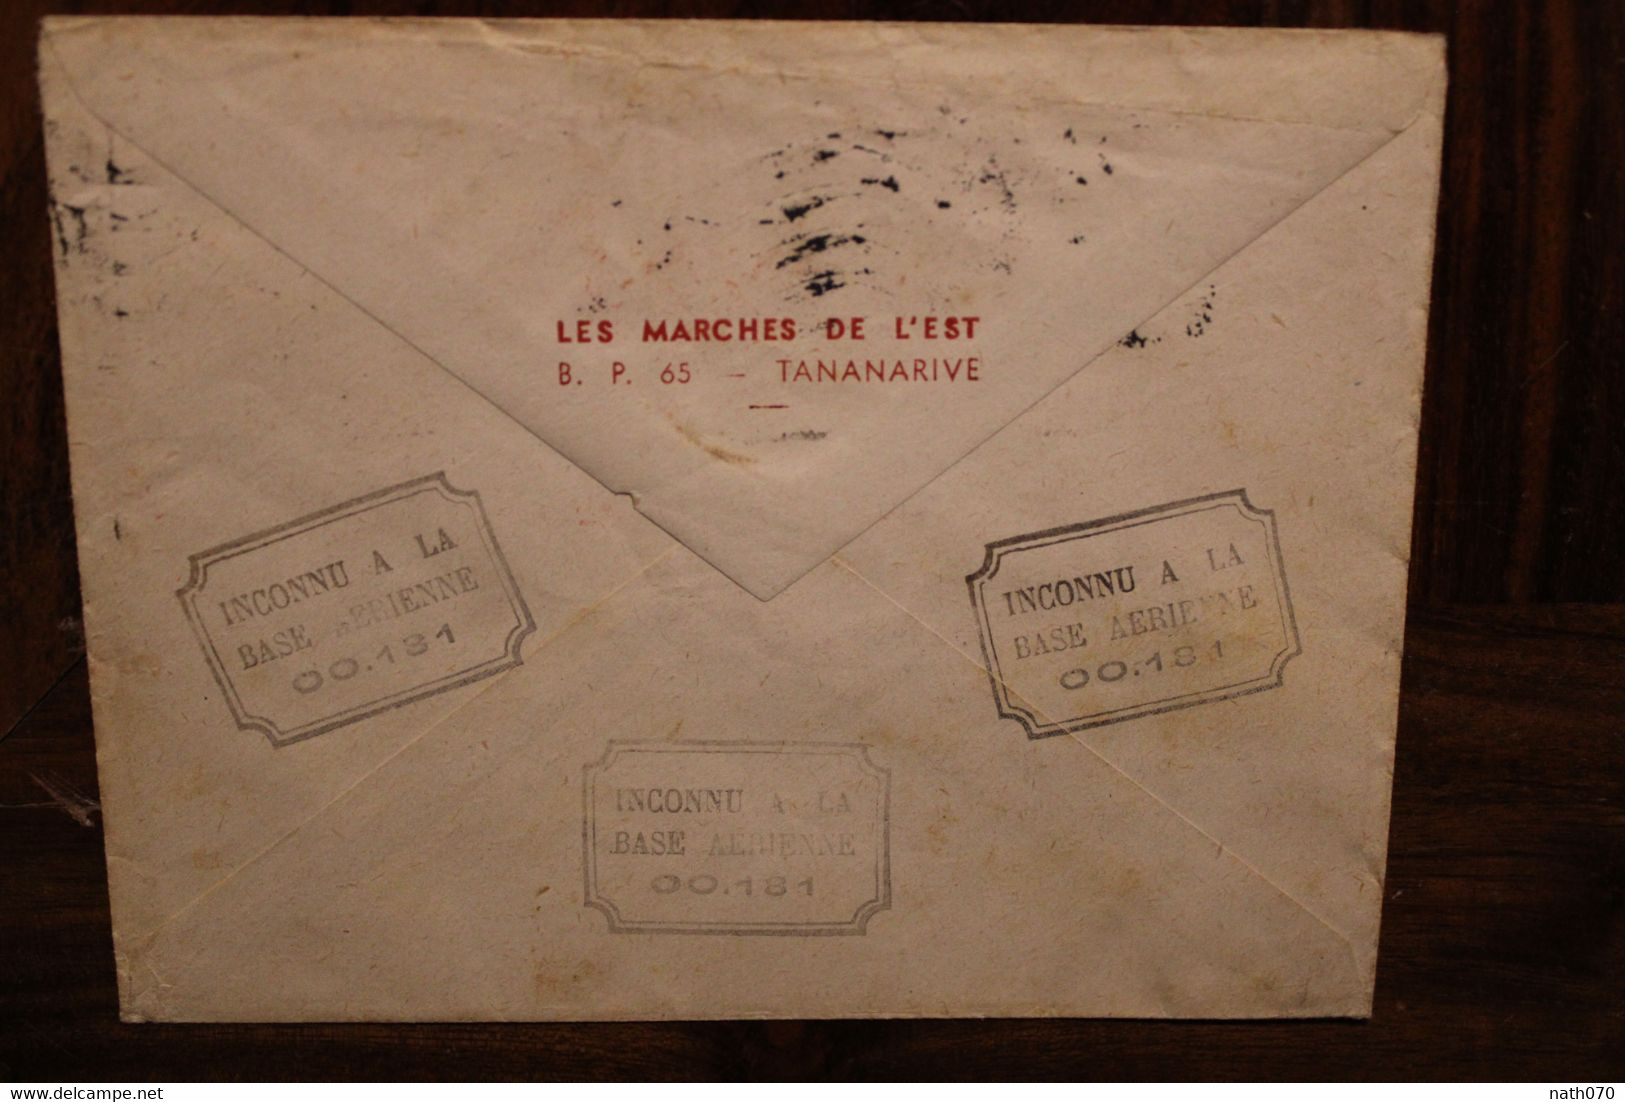 1957 Madagascar France Inconnu à La Base Aerienne Timbre Seul Cover Air Mail Flamme Radio Naviguant Militaire Ivalo - Briefe U. Dokumente